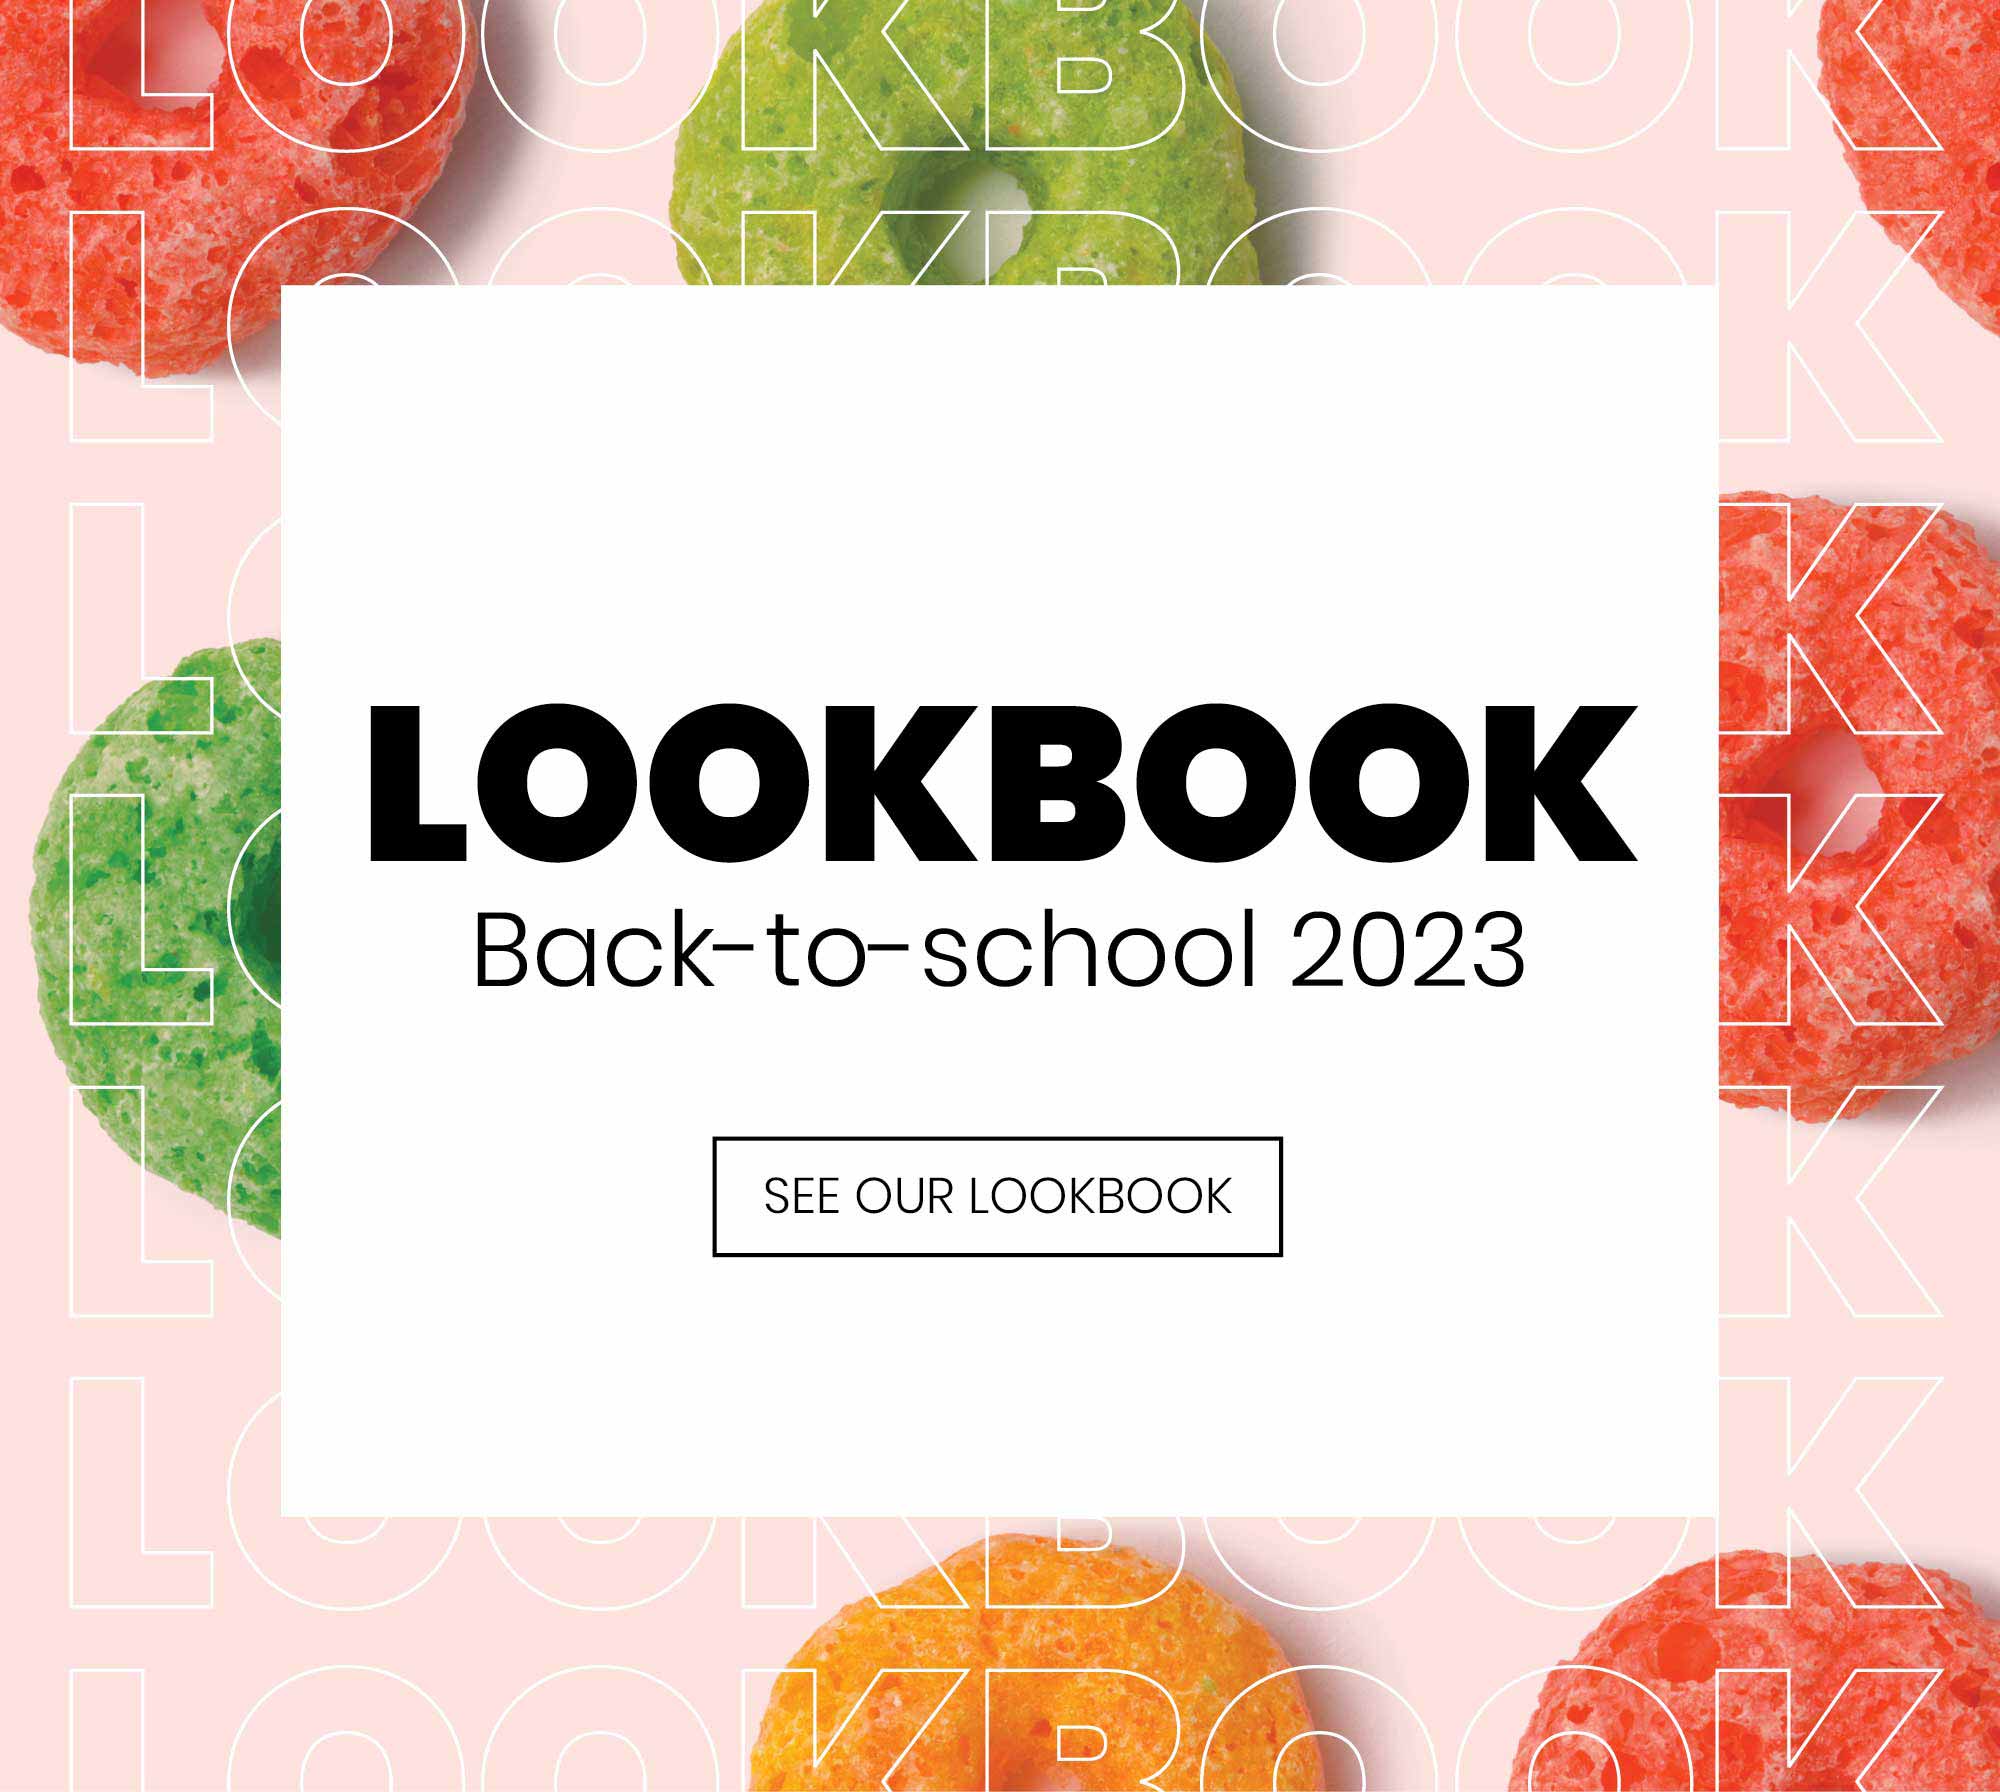 Look Book - Back-to-school 2023